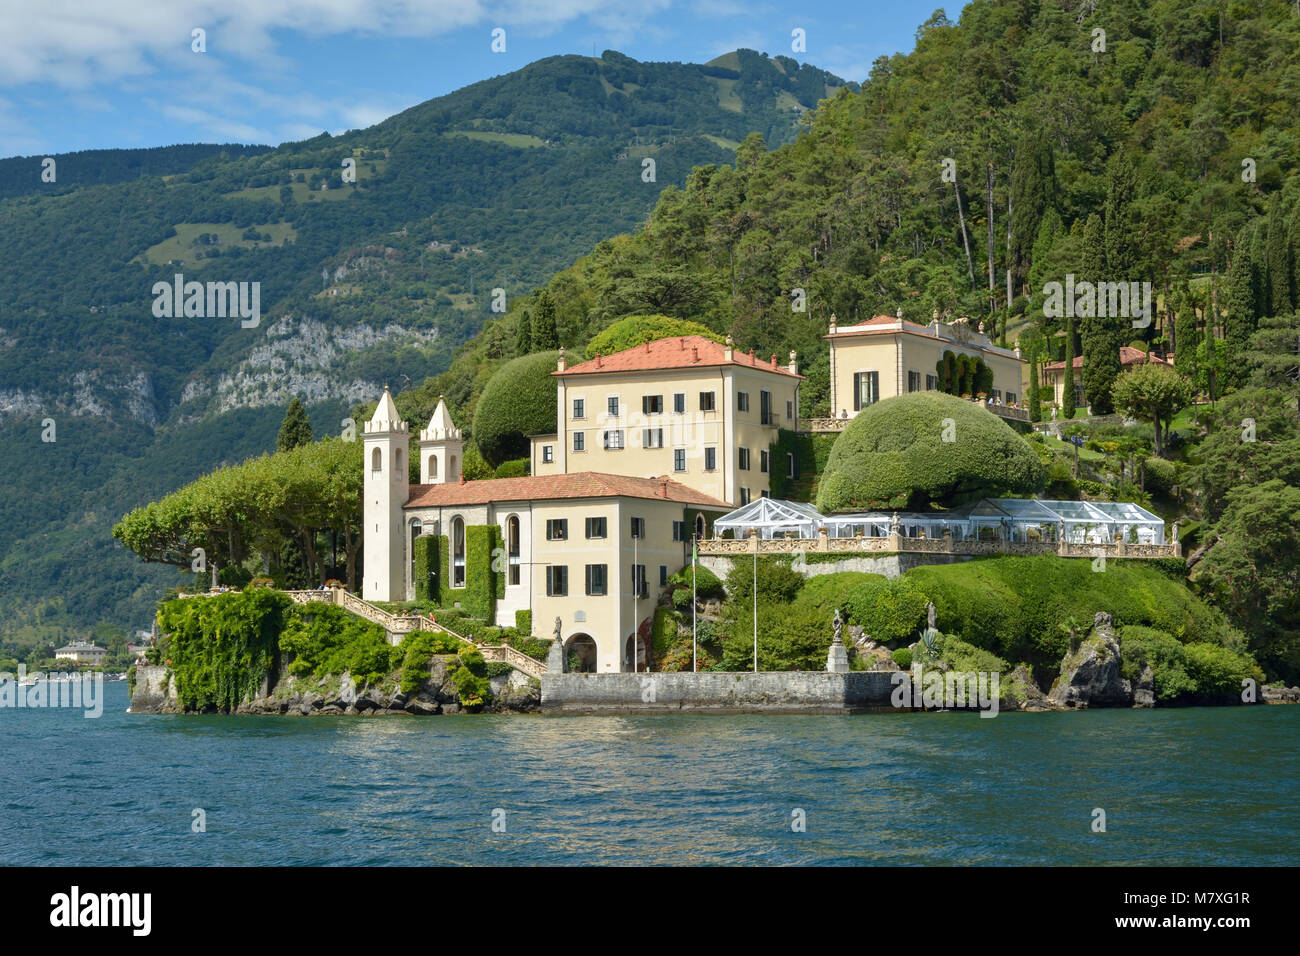 Villa del Balbianello is one of the most beautiful villas overlooking lake Como Stock Photo